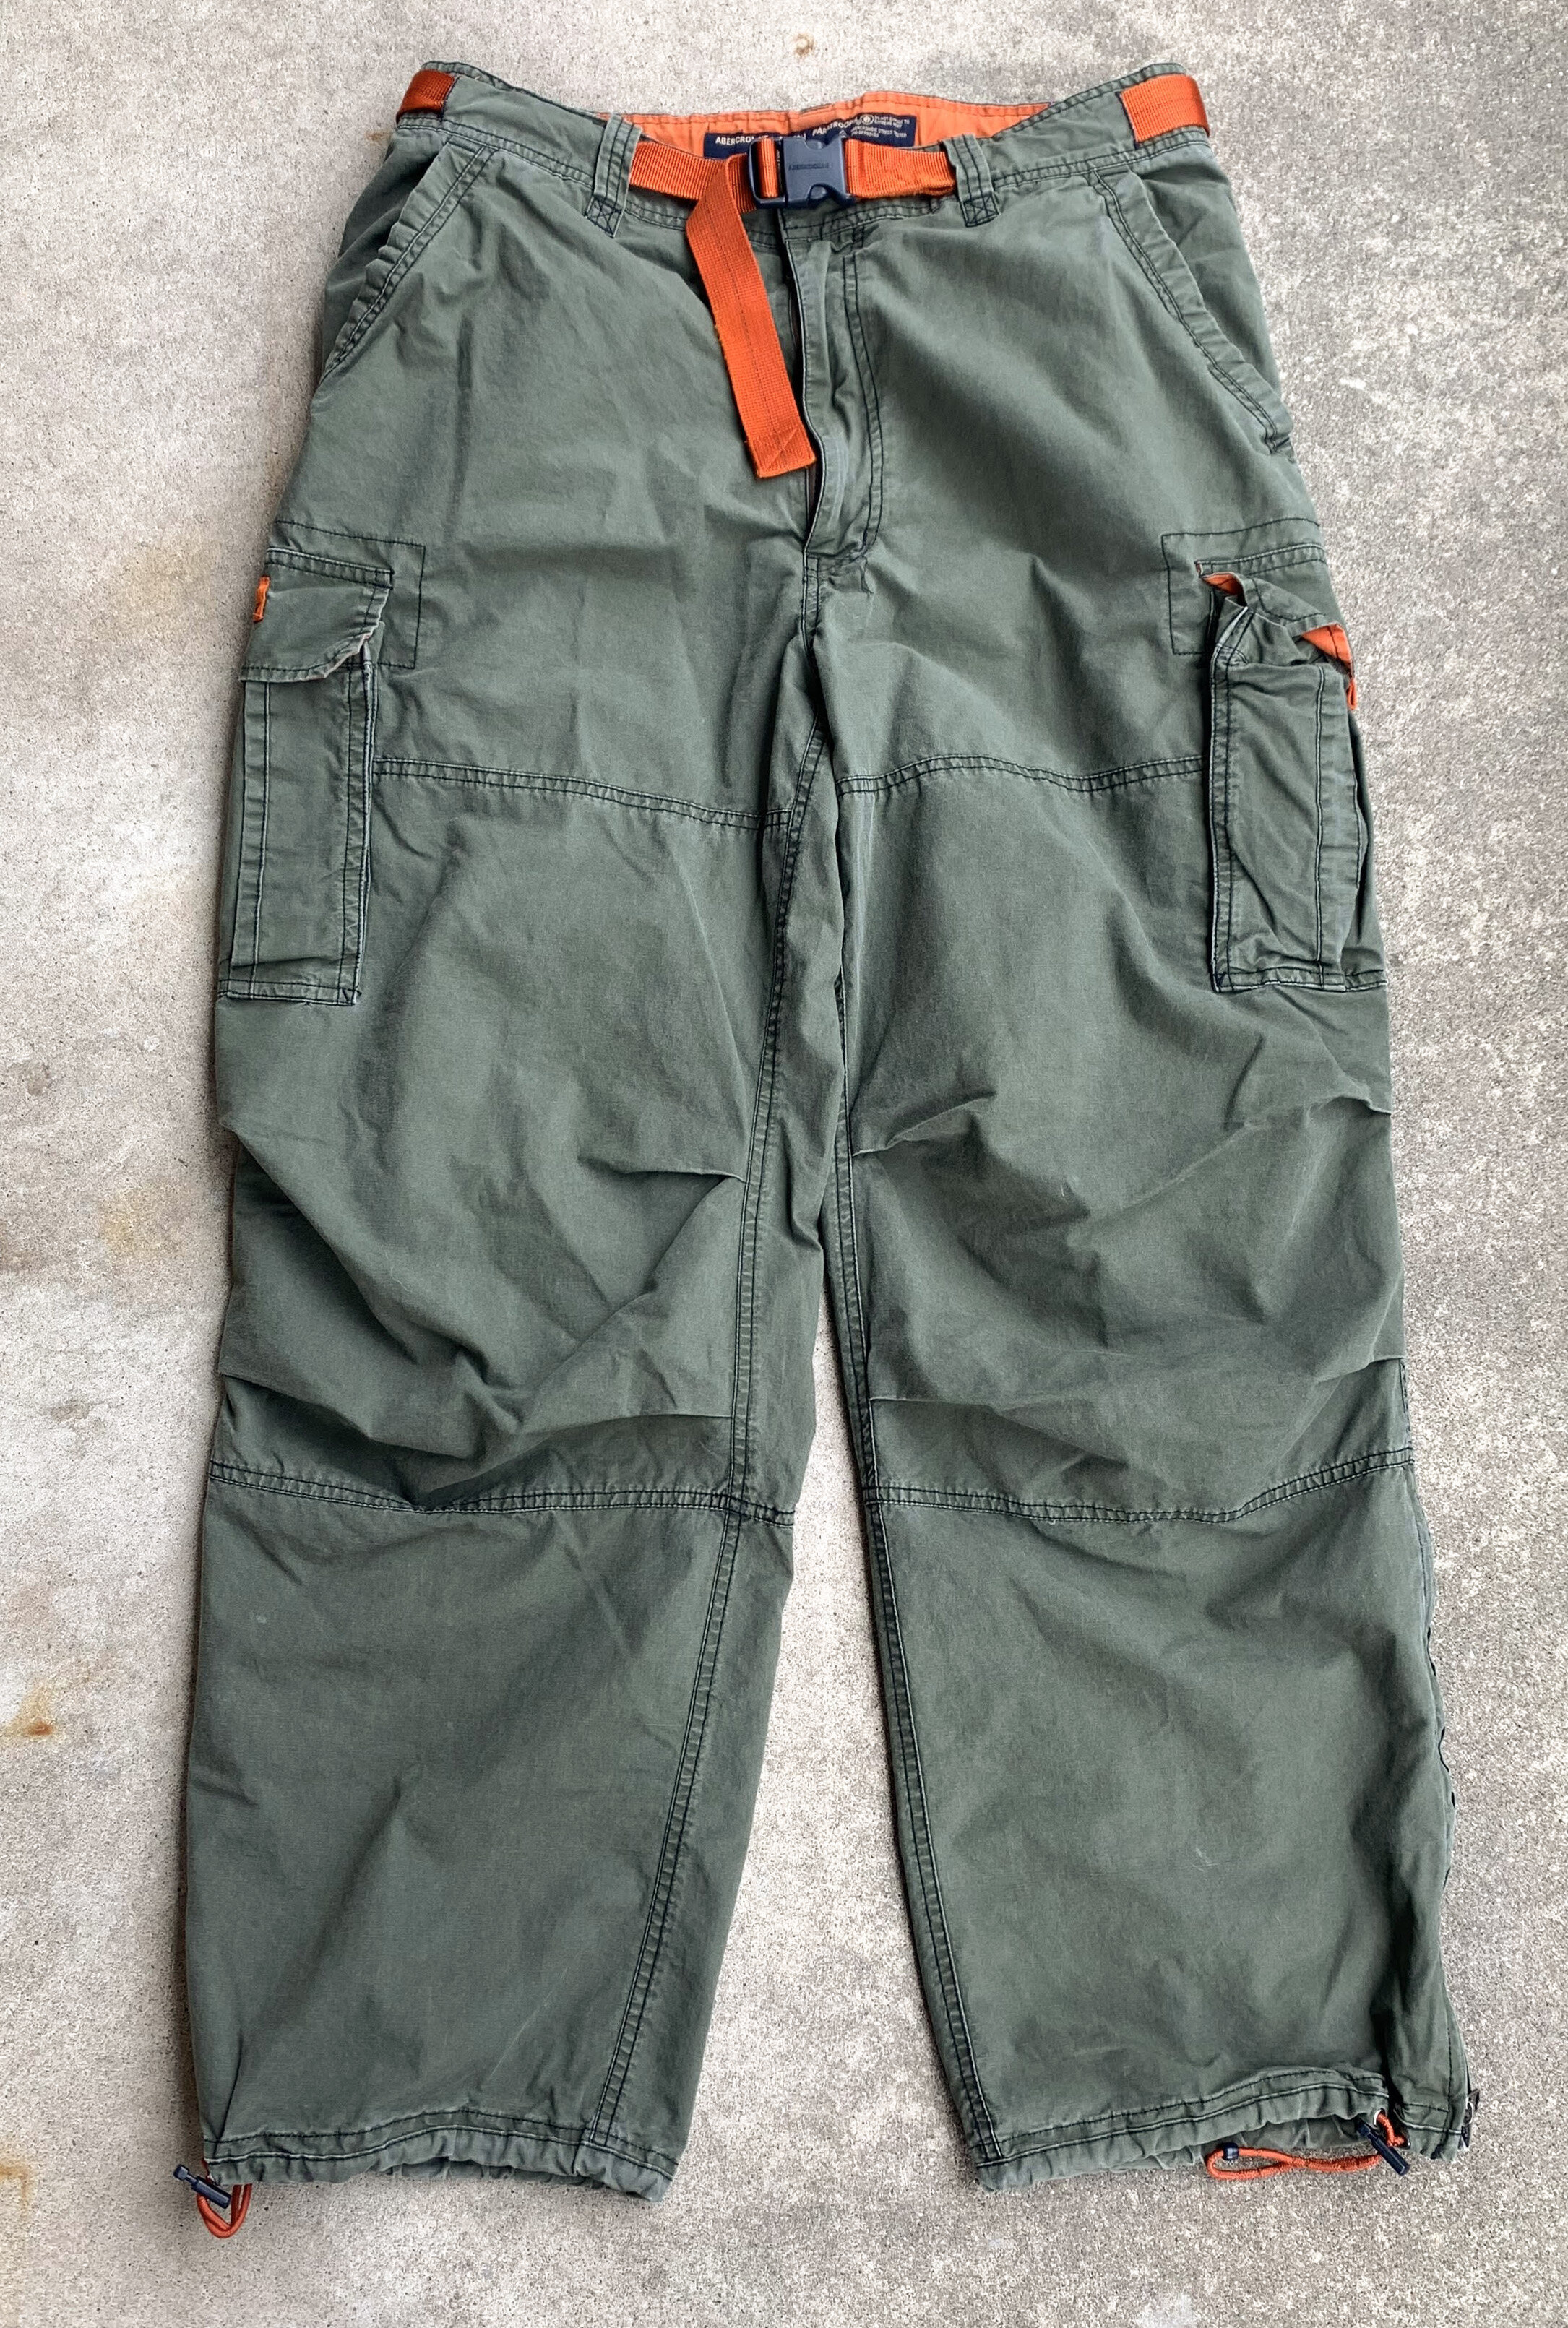 Vintage Abercrombie & Fitch Cargo Olive / Orange Pants (Size L) — Roots